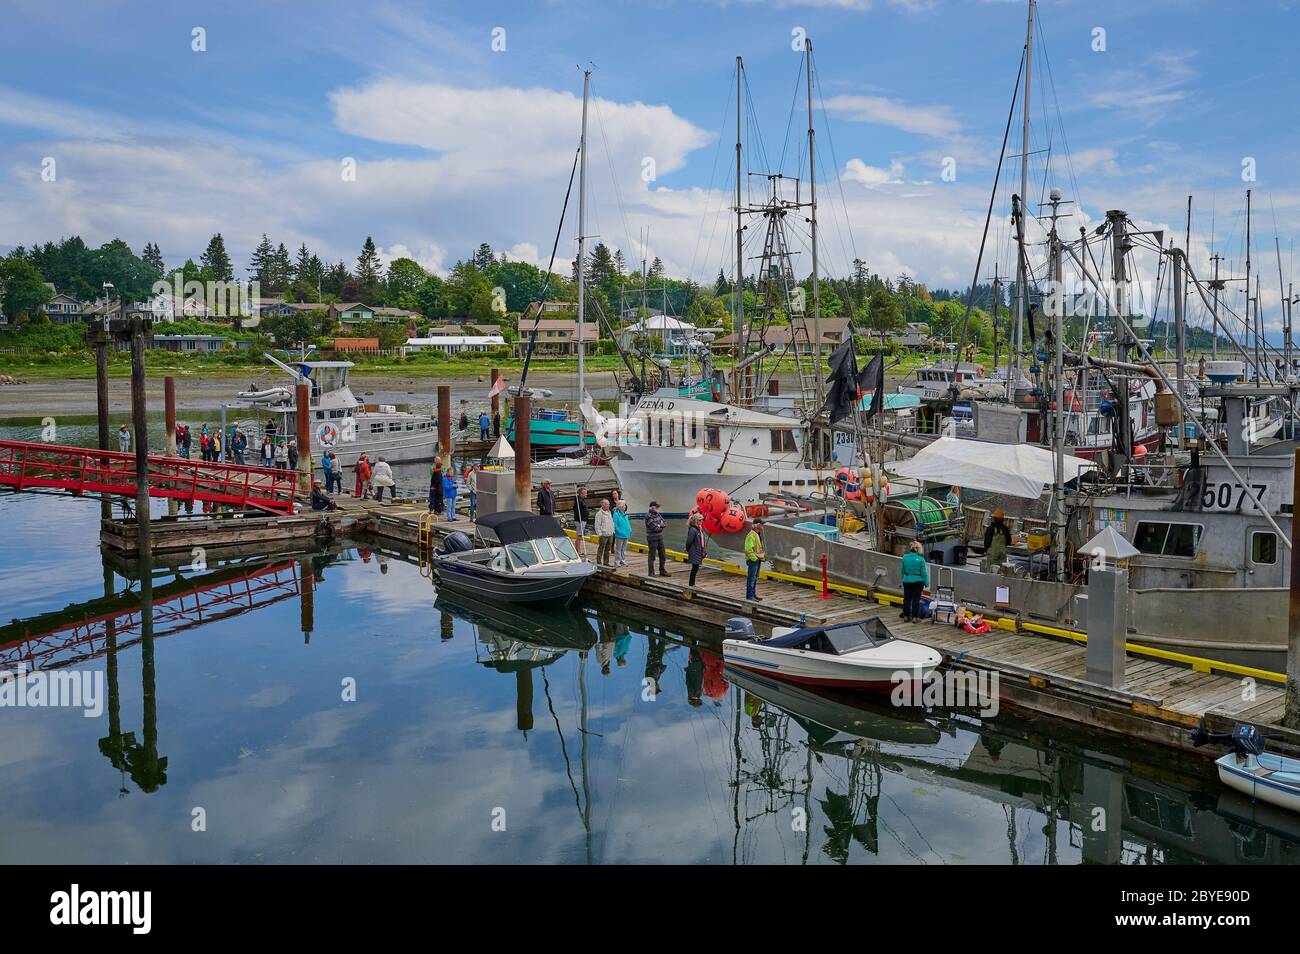 Leute Schlange für Heilbutt, Comox Marina, Comox, Comox Valley, Vancouver Island, B.C Kanada Stockfoto